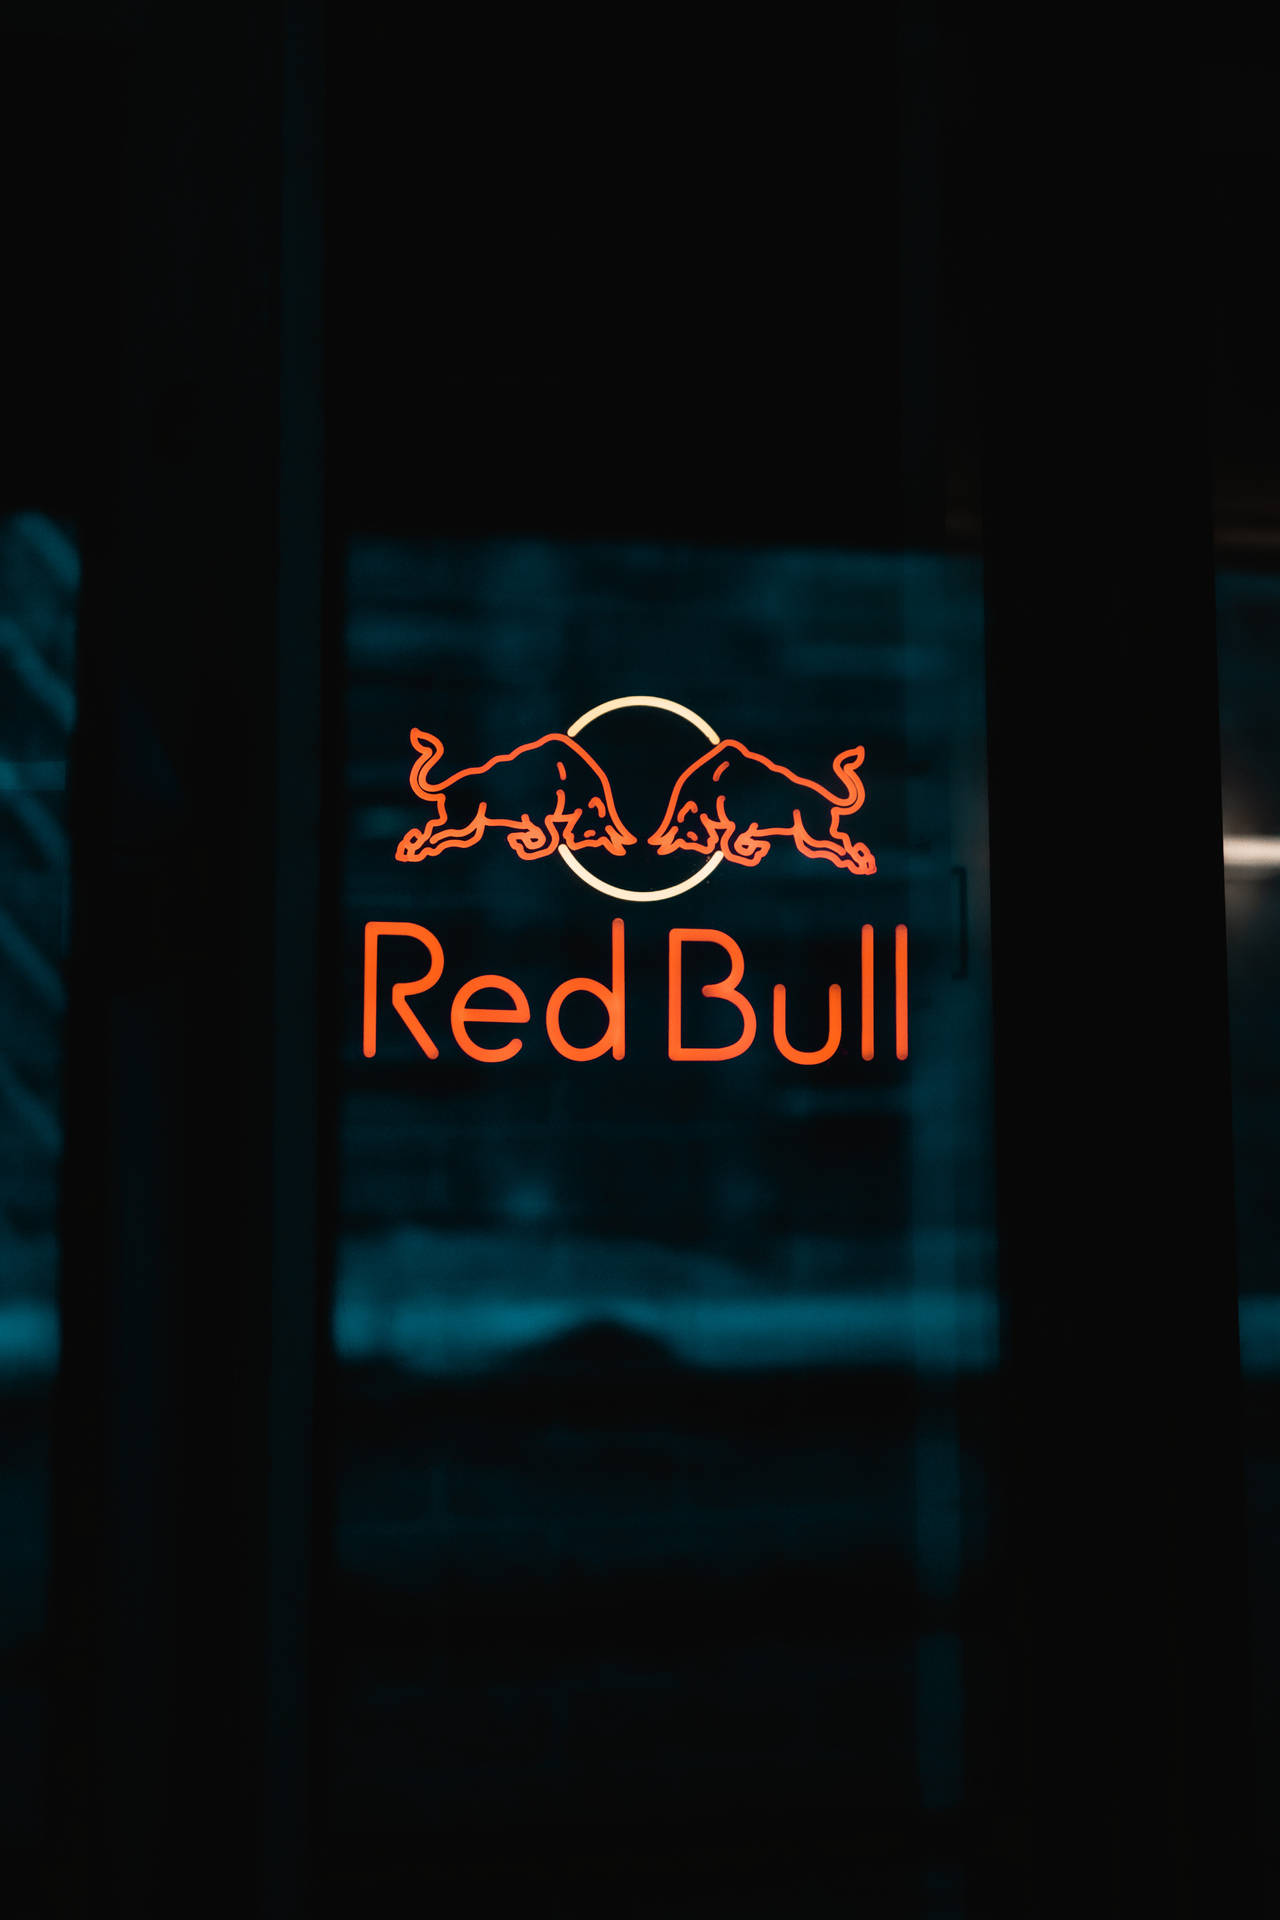 Red Bull Signage Dark Window